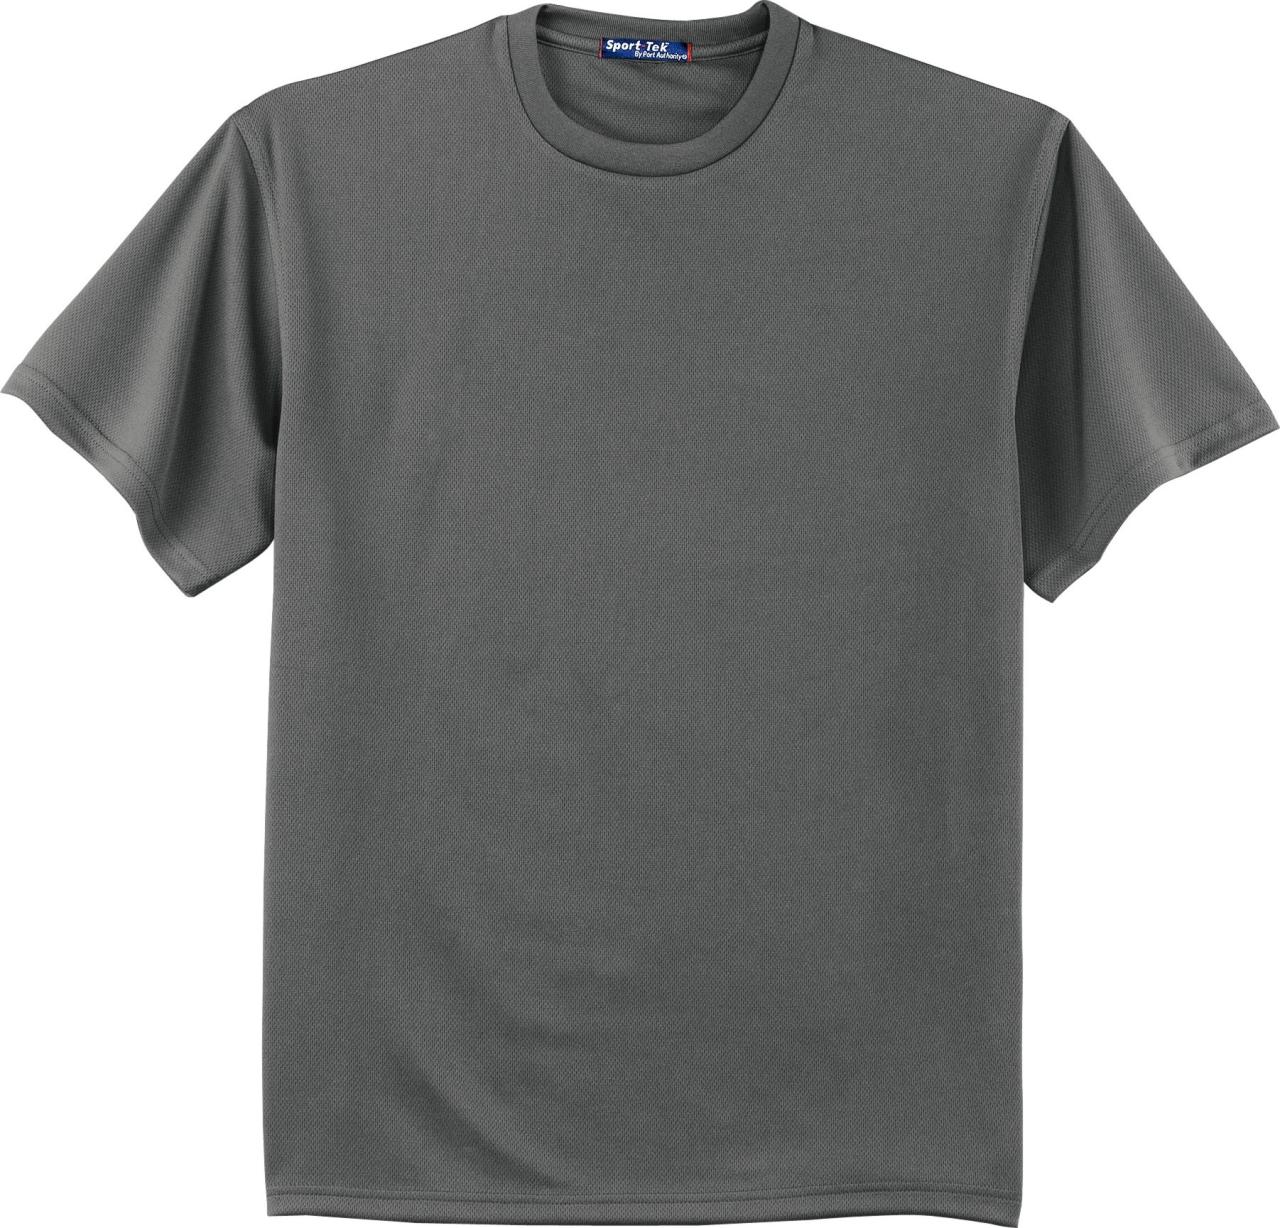 Blank T Grey Shirt Mockup